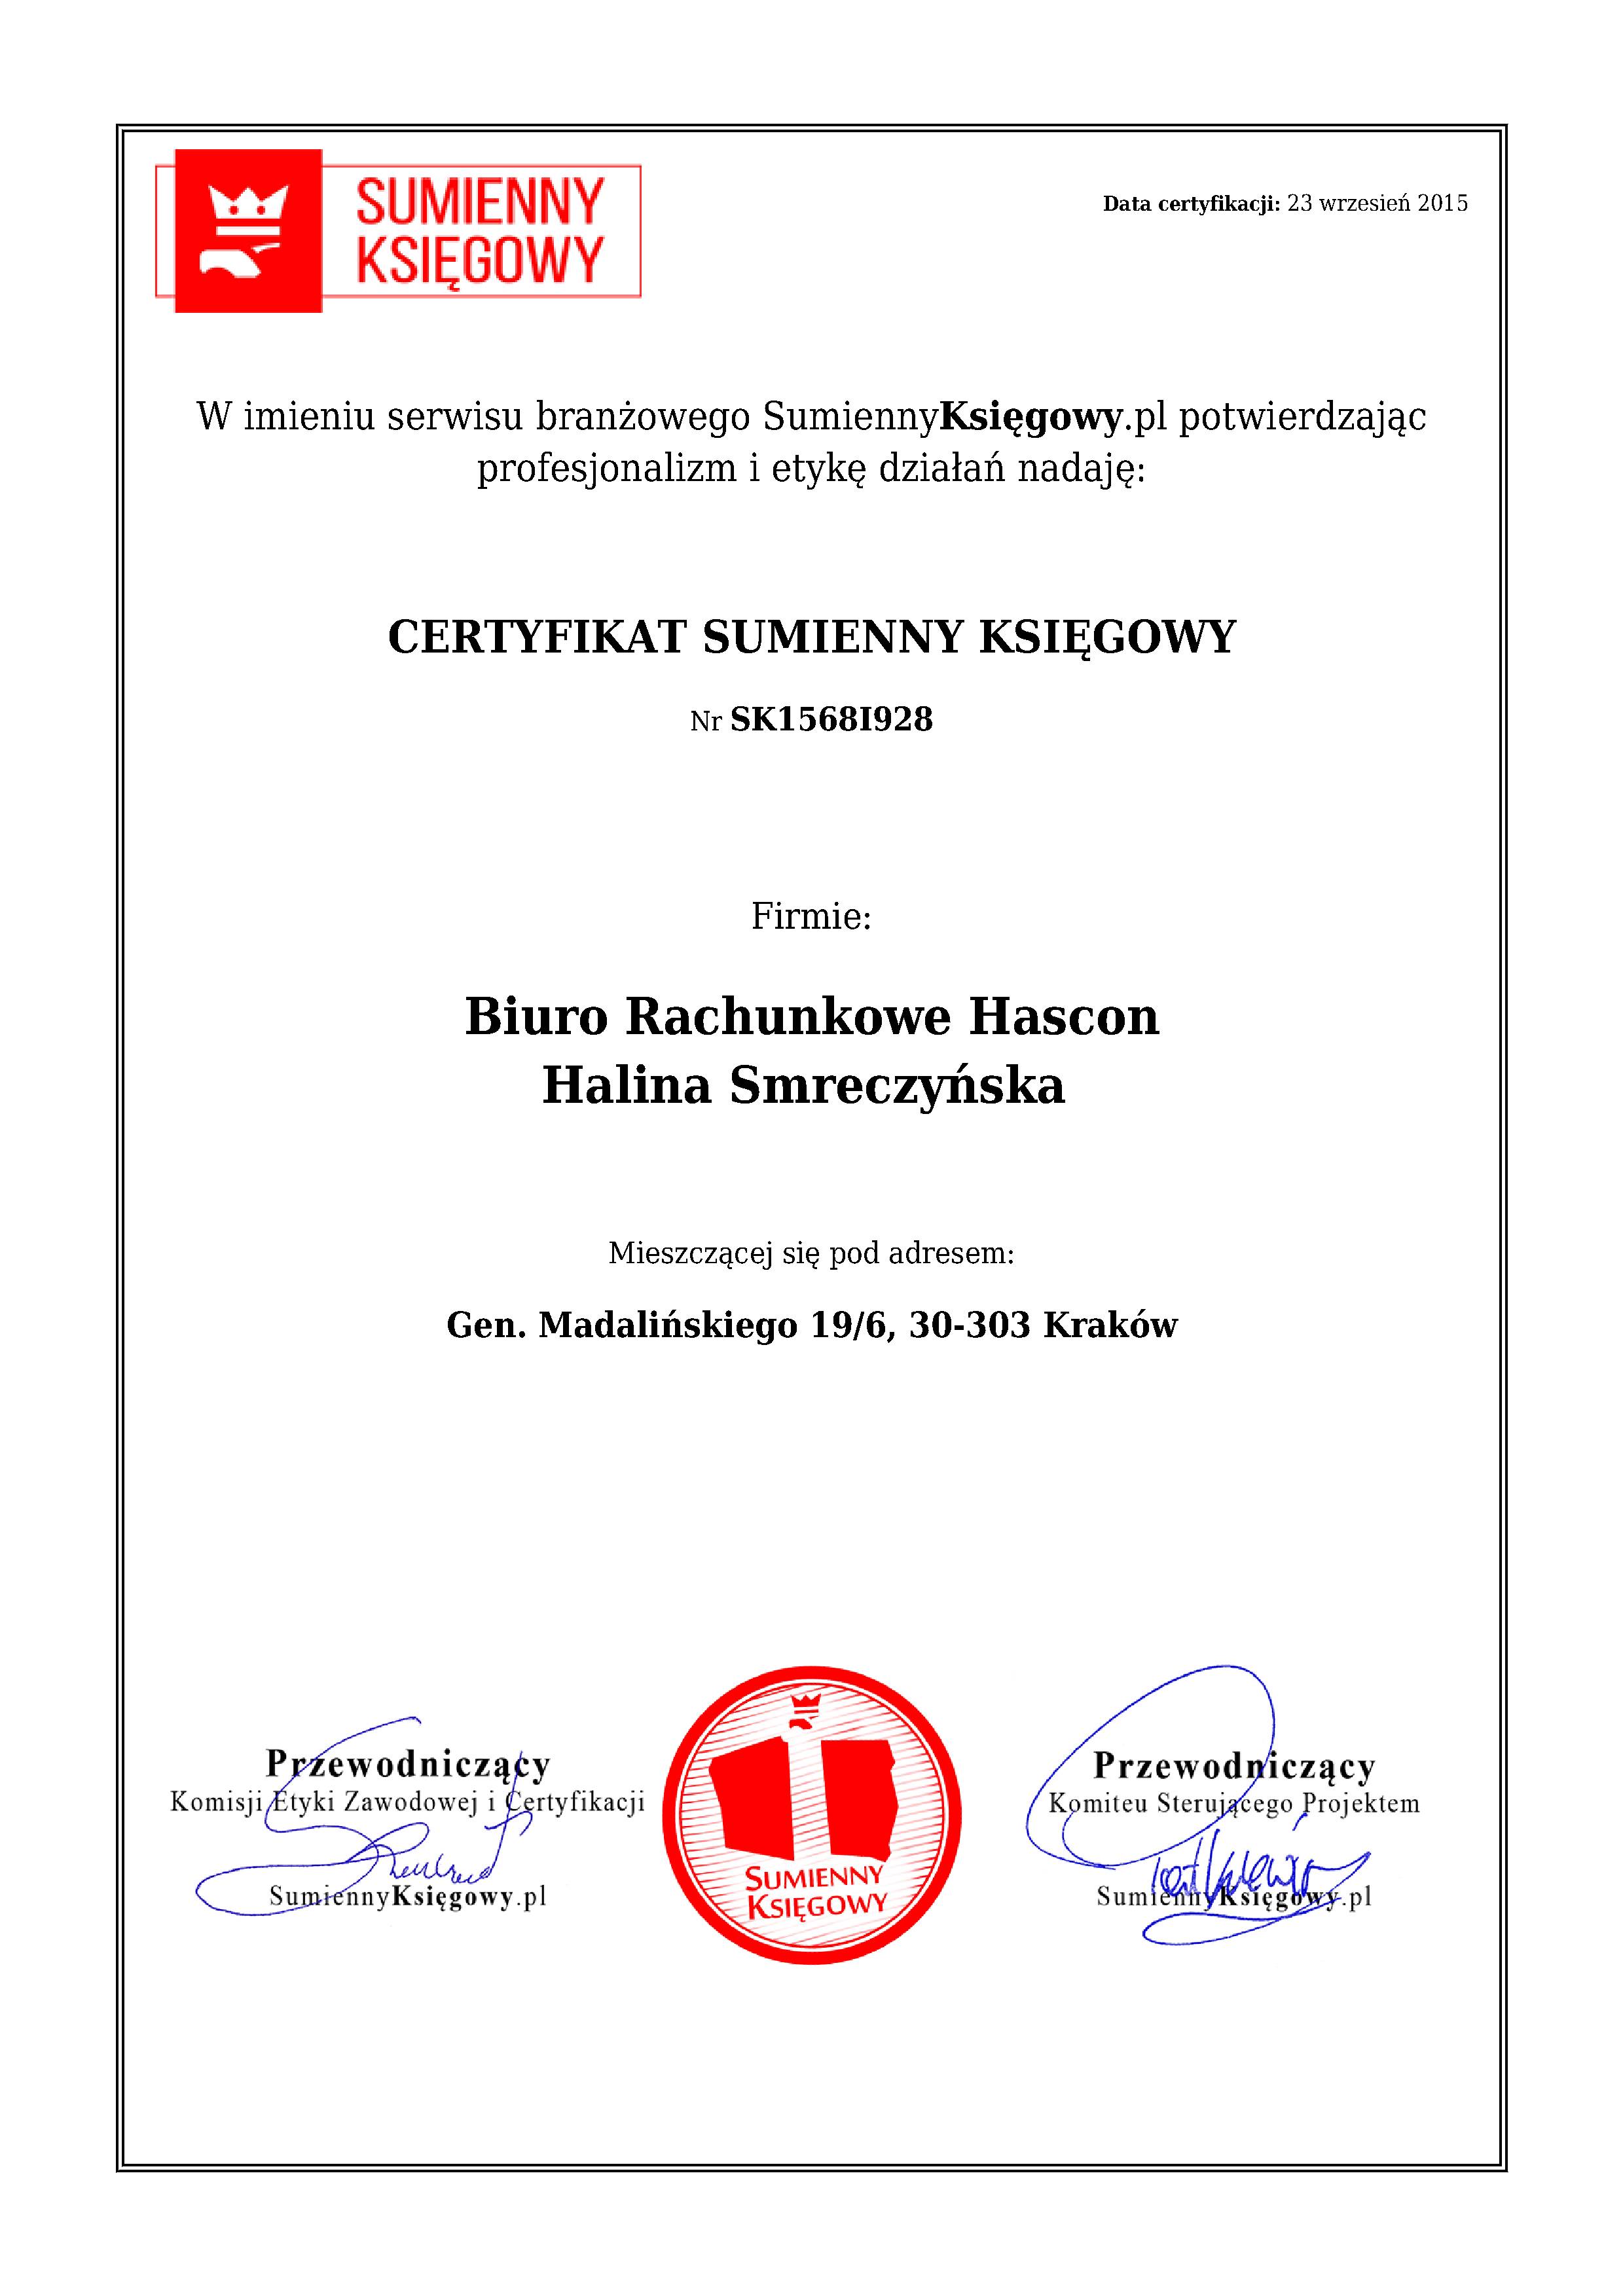 Biuro Rachunkowe Hascon Halina Smreczyńska  certyfikat 1